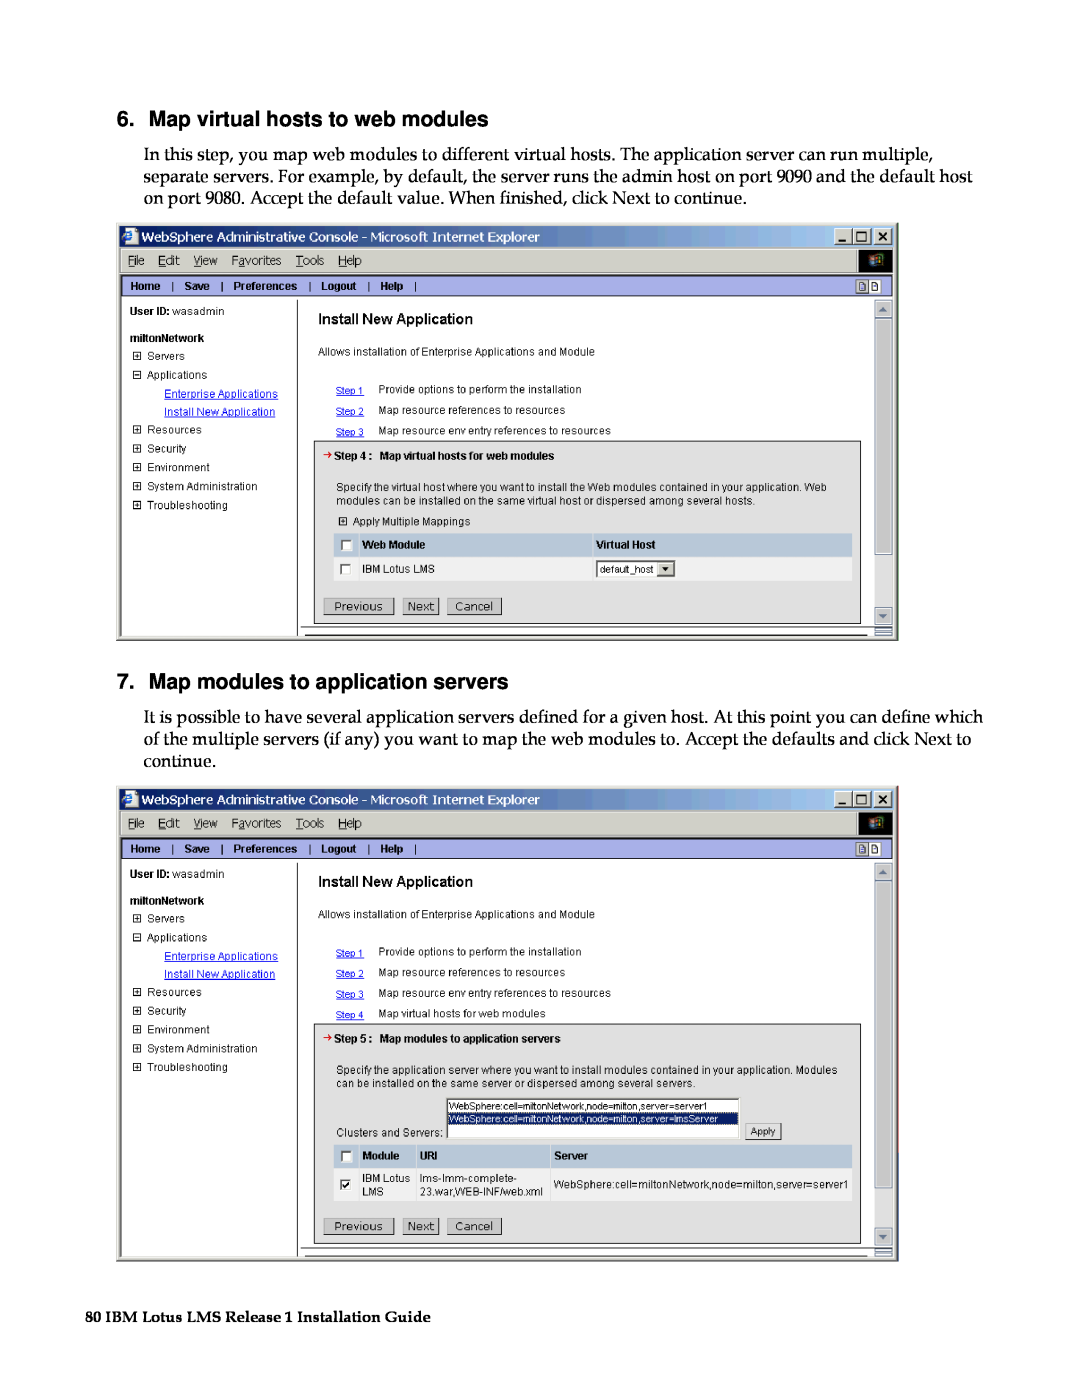 IBM G210-1784-00 manual Map virtual hosts to web modules, Map modules to application servers 